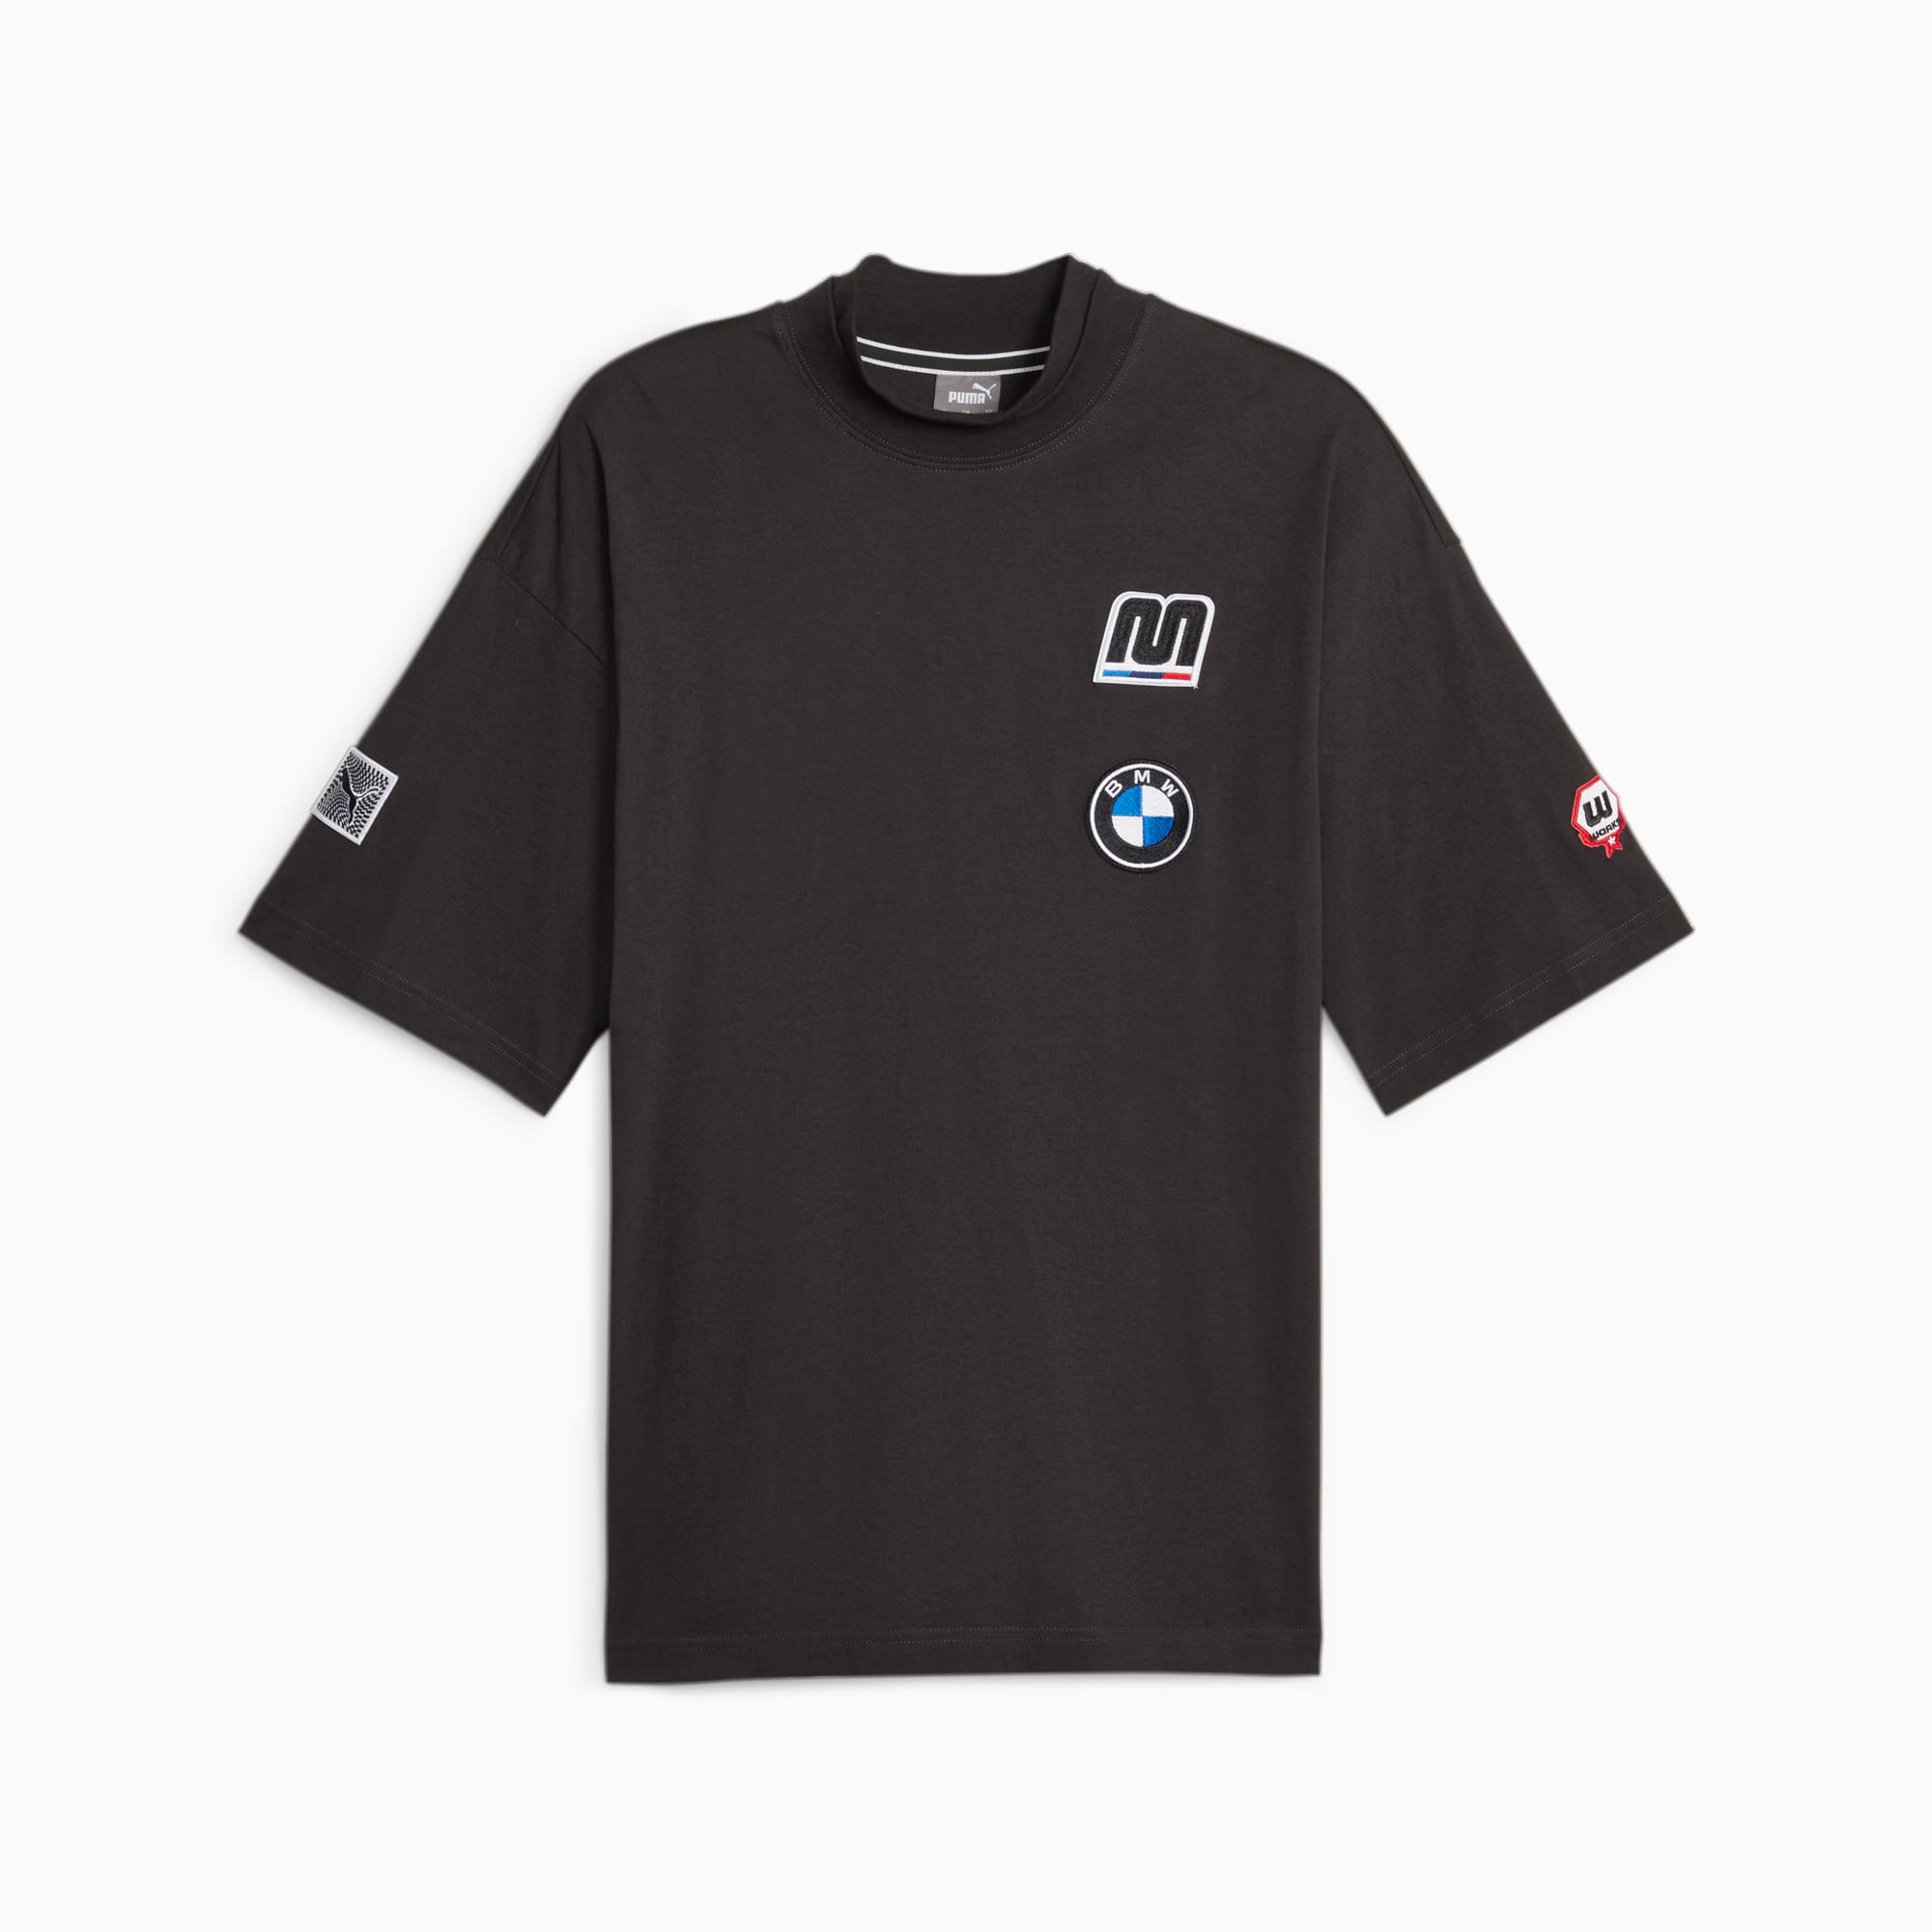 Puma Adult BMW Racing Black Garage T-Shirt, Men's, Medium